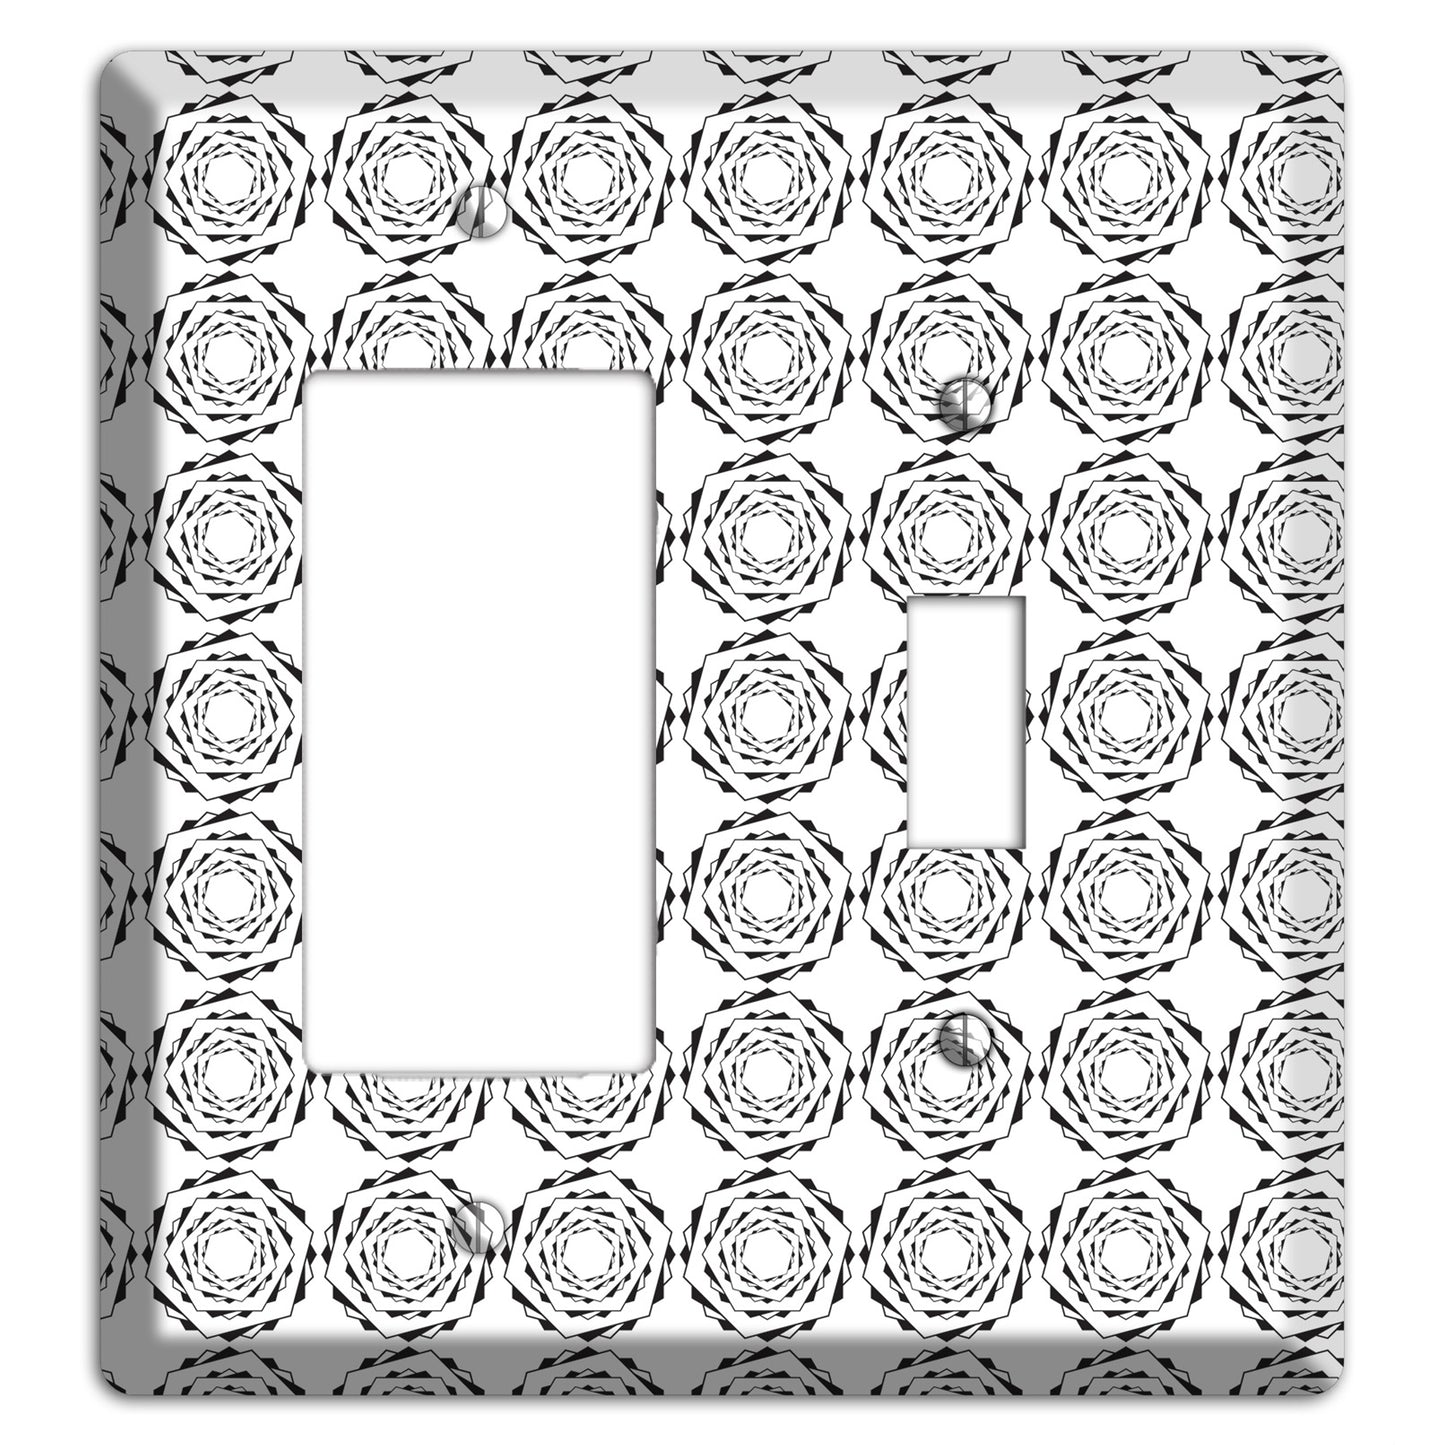 Hexagon Rotation Repeat Rocker / Toggle Wallplate